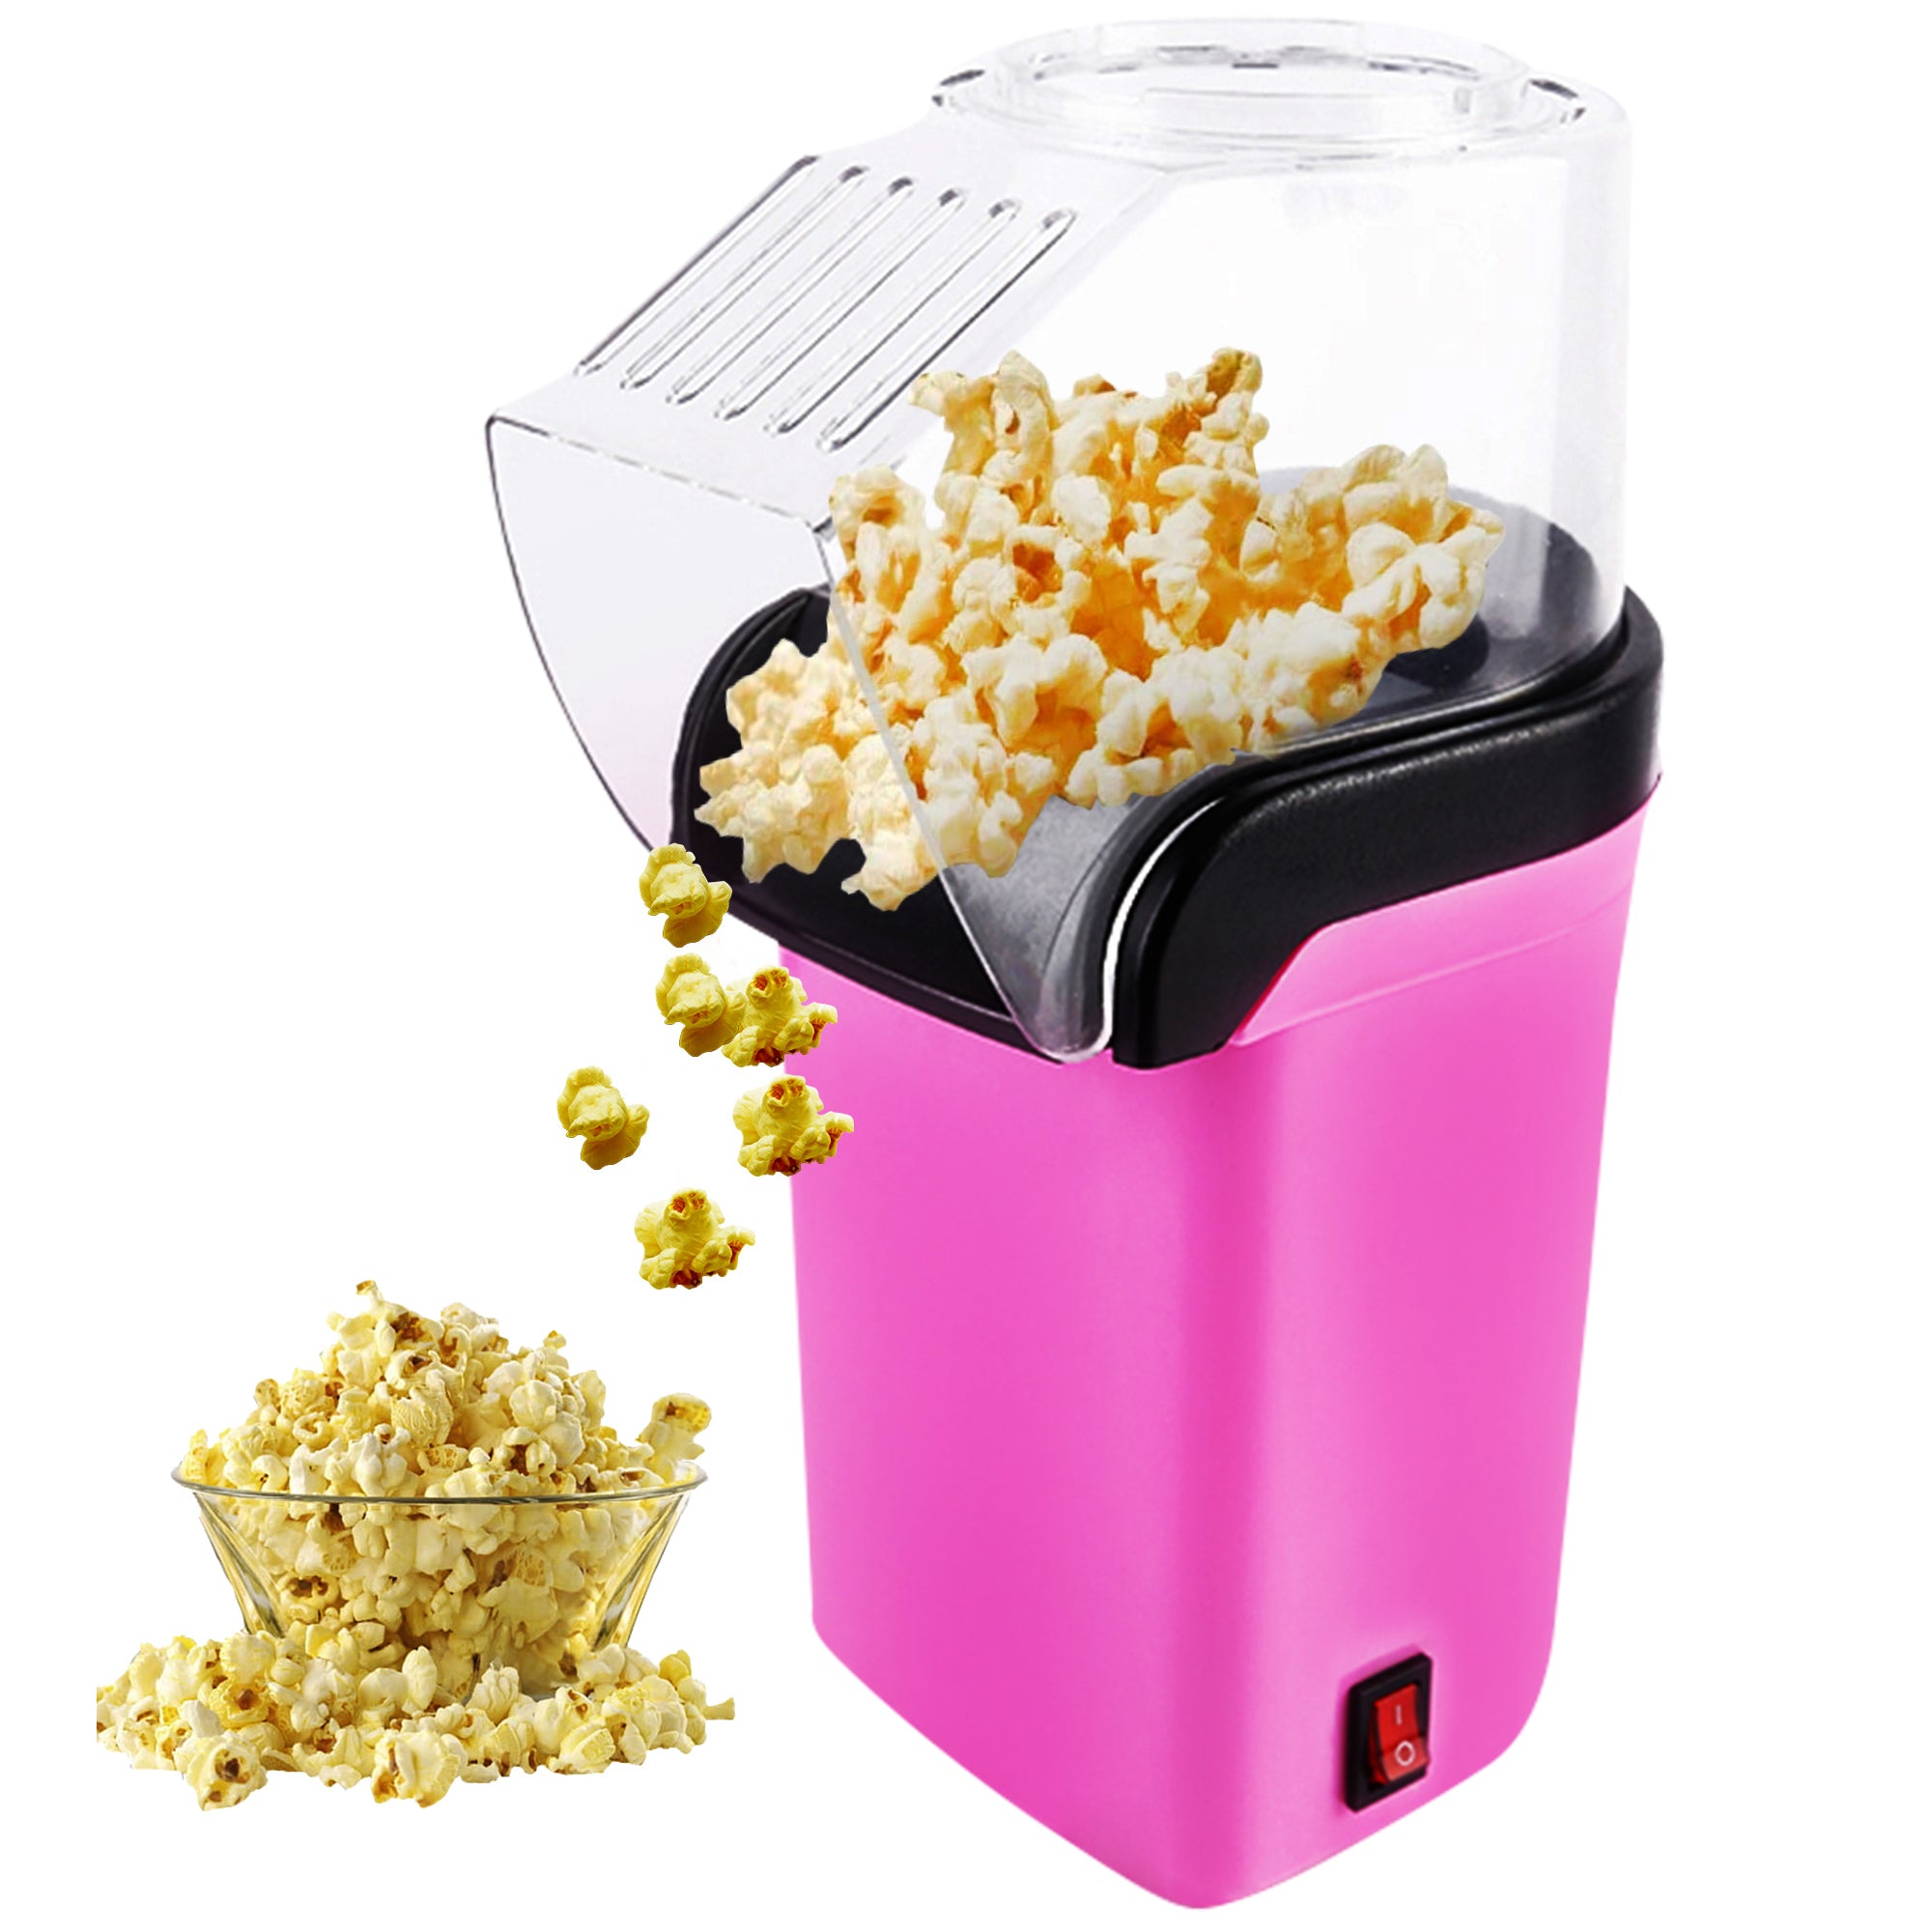 5 Core Hot Air Popcorn Popper Pink 1200W Electric Popcorn Machine Kernel Corn Maker Bpa Free, 16 Cups Capacity